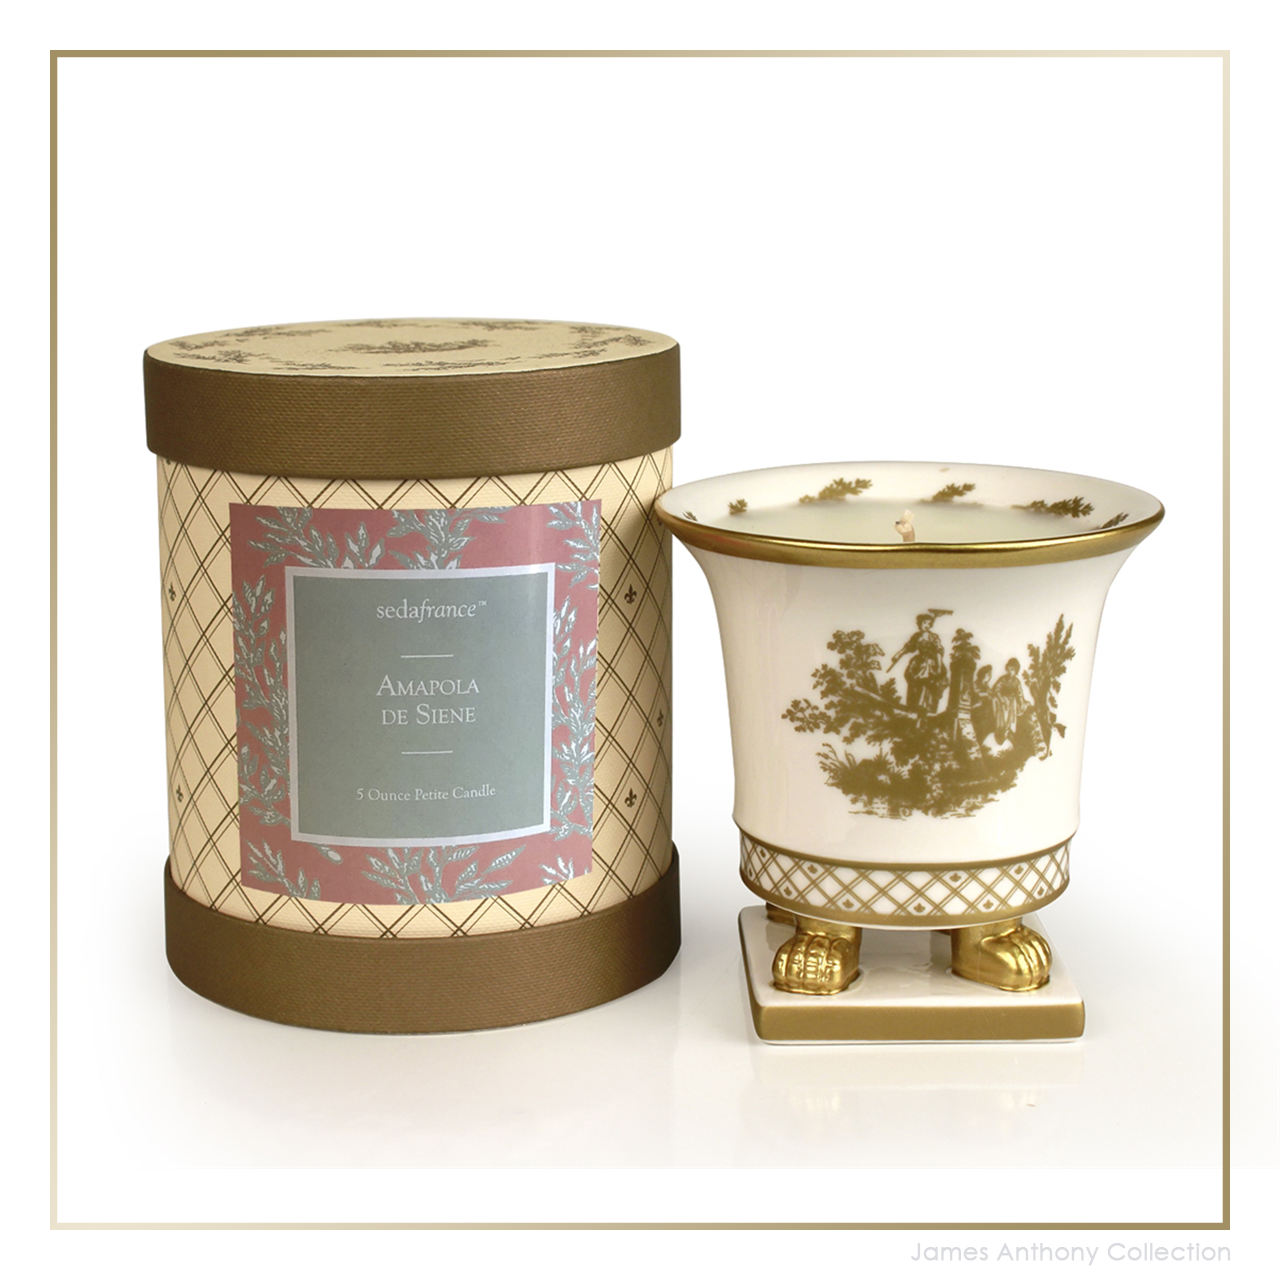 SEDA France Ampola de Seiner Classic Toile Petite Ceramic Candle | James  Anthony Collection